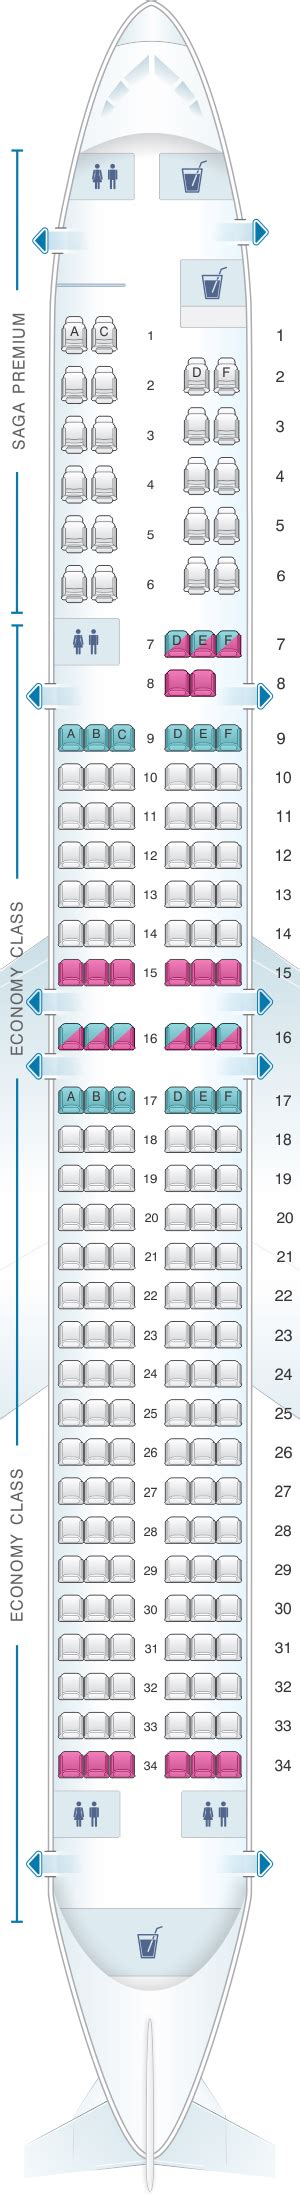 Boeing Seating Chart Icelandair Infoupdate Org